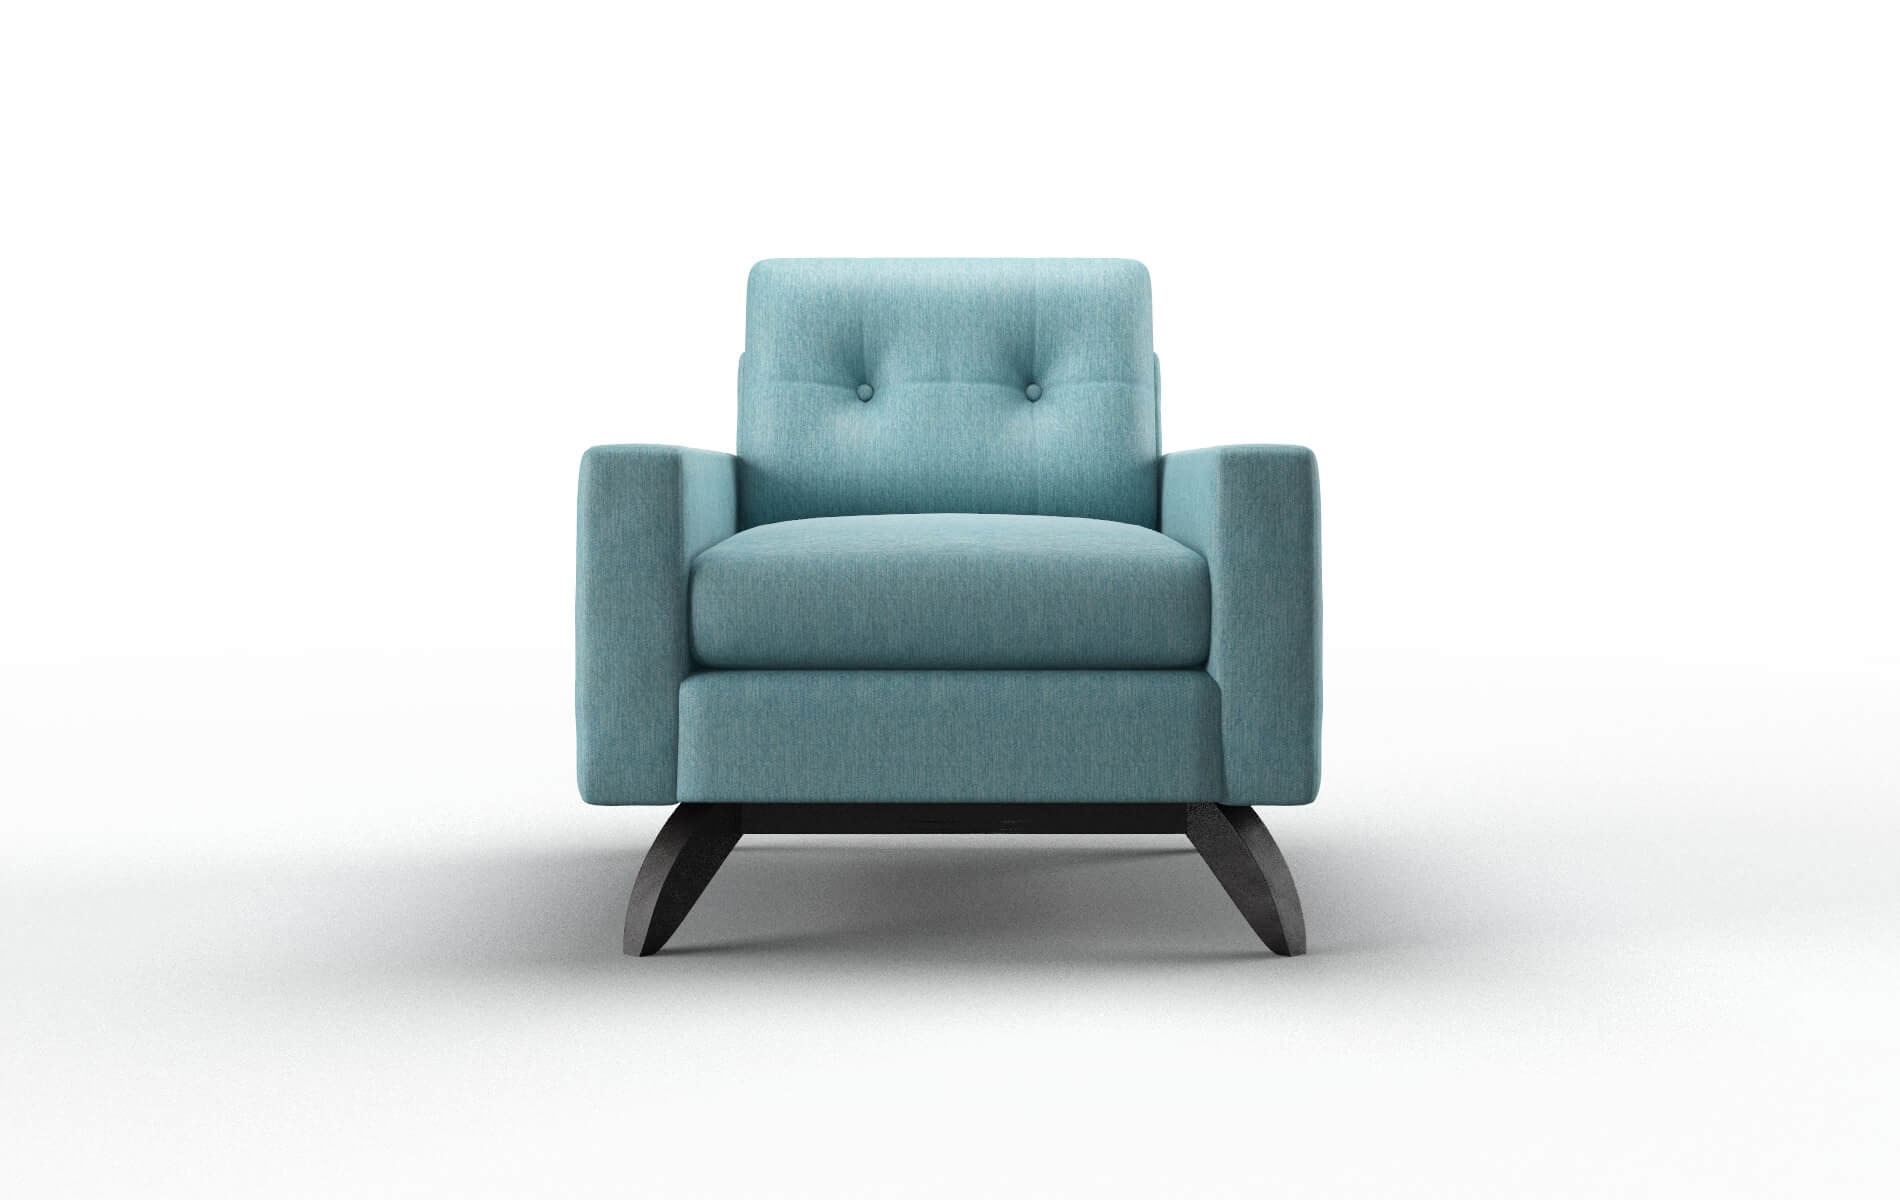 Milan Cosmo Turquoise chair espresso legs